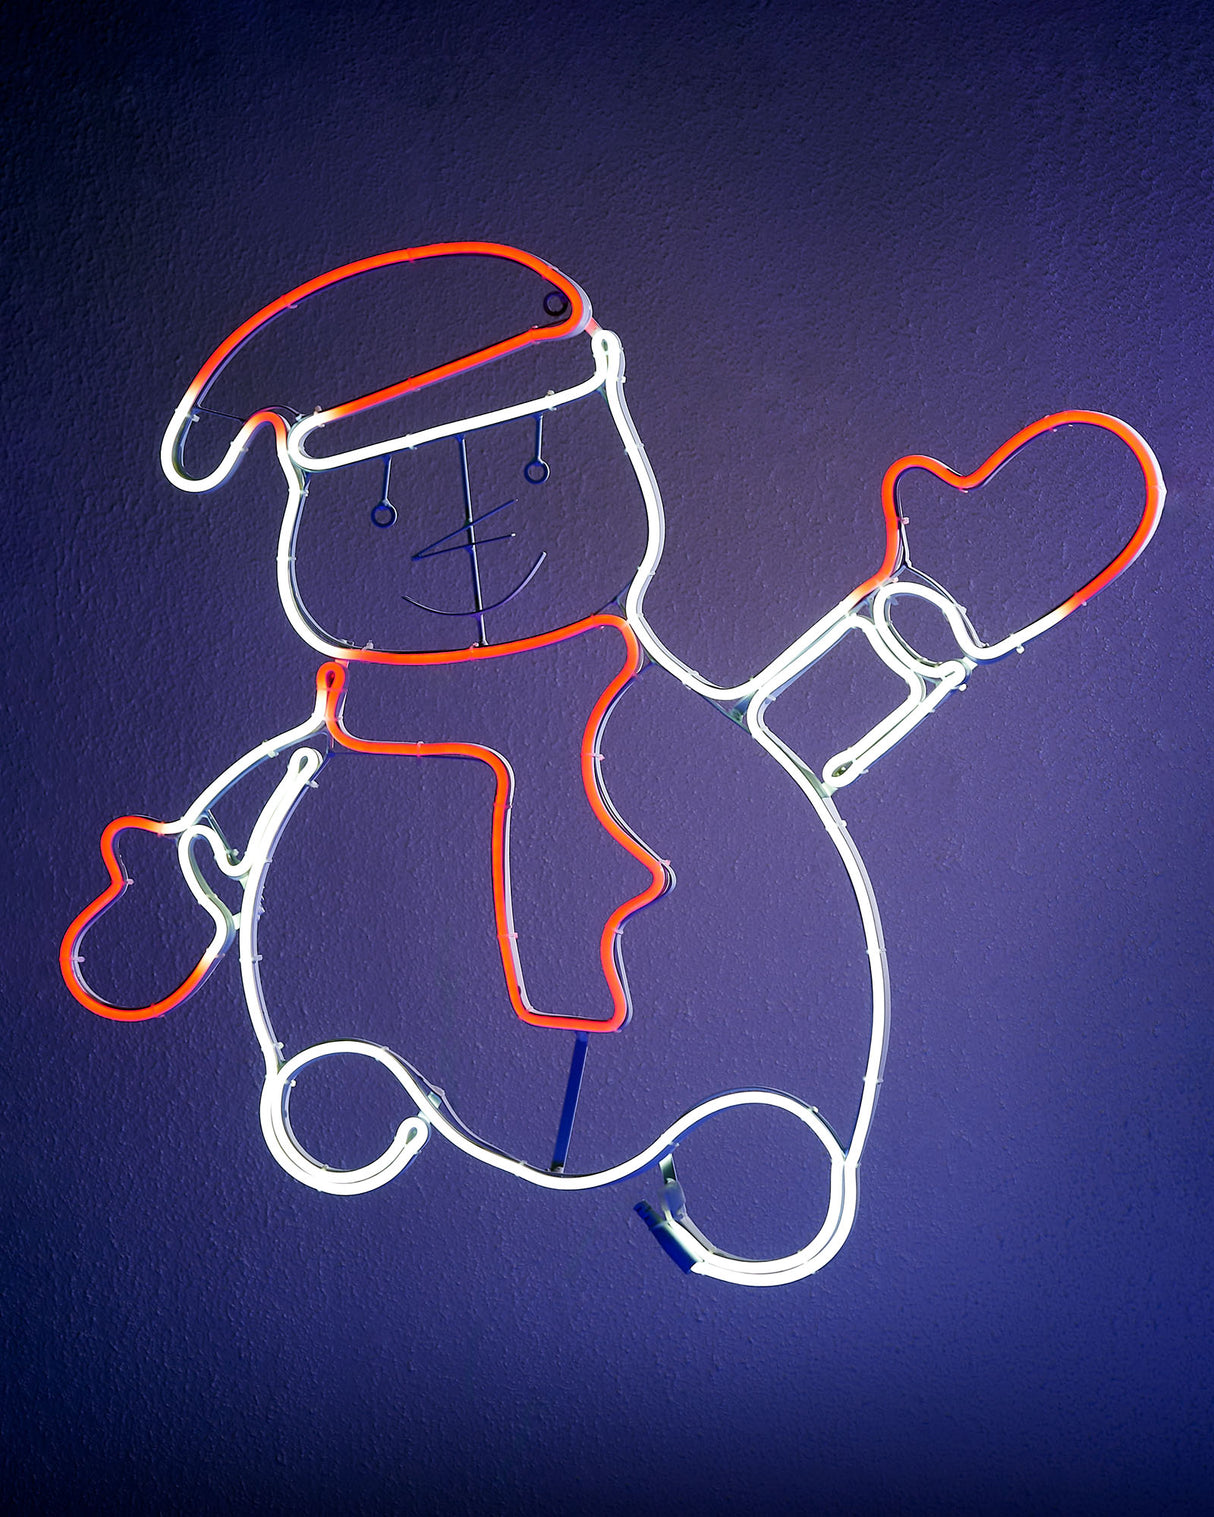 Waving Snowman Neon Rope Light Silhouette, 72 cm